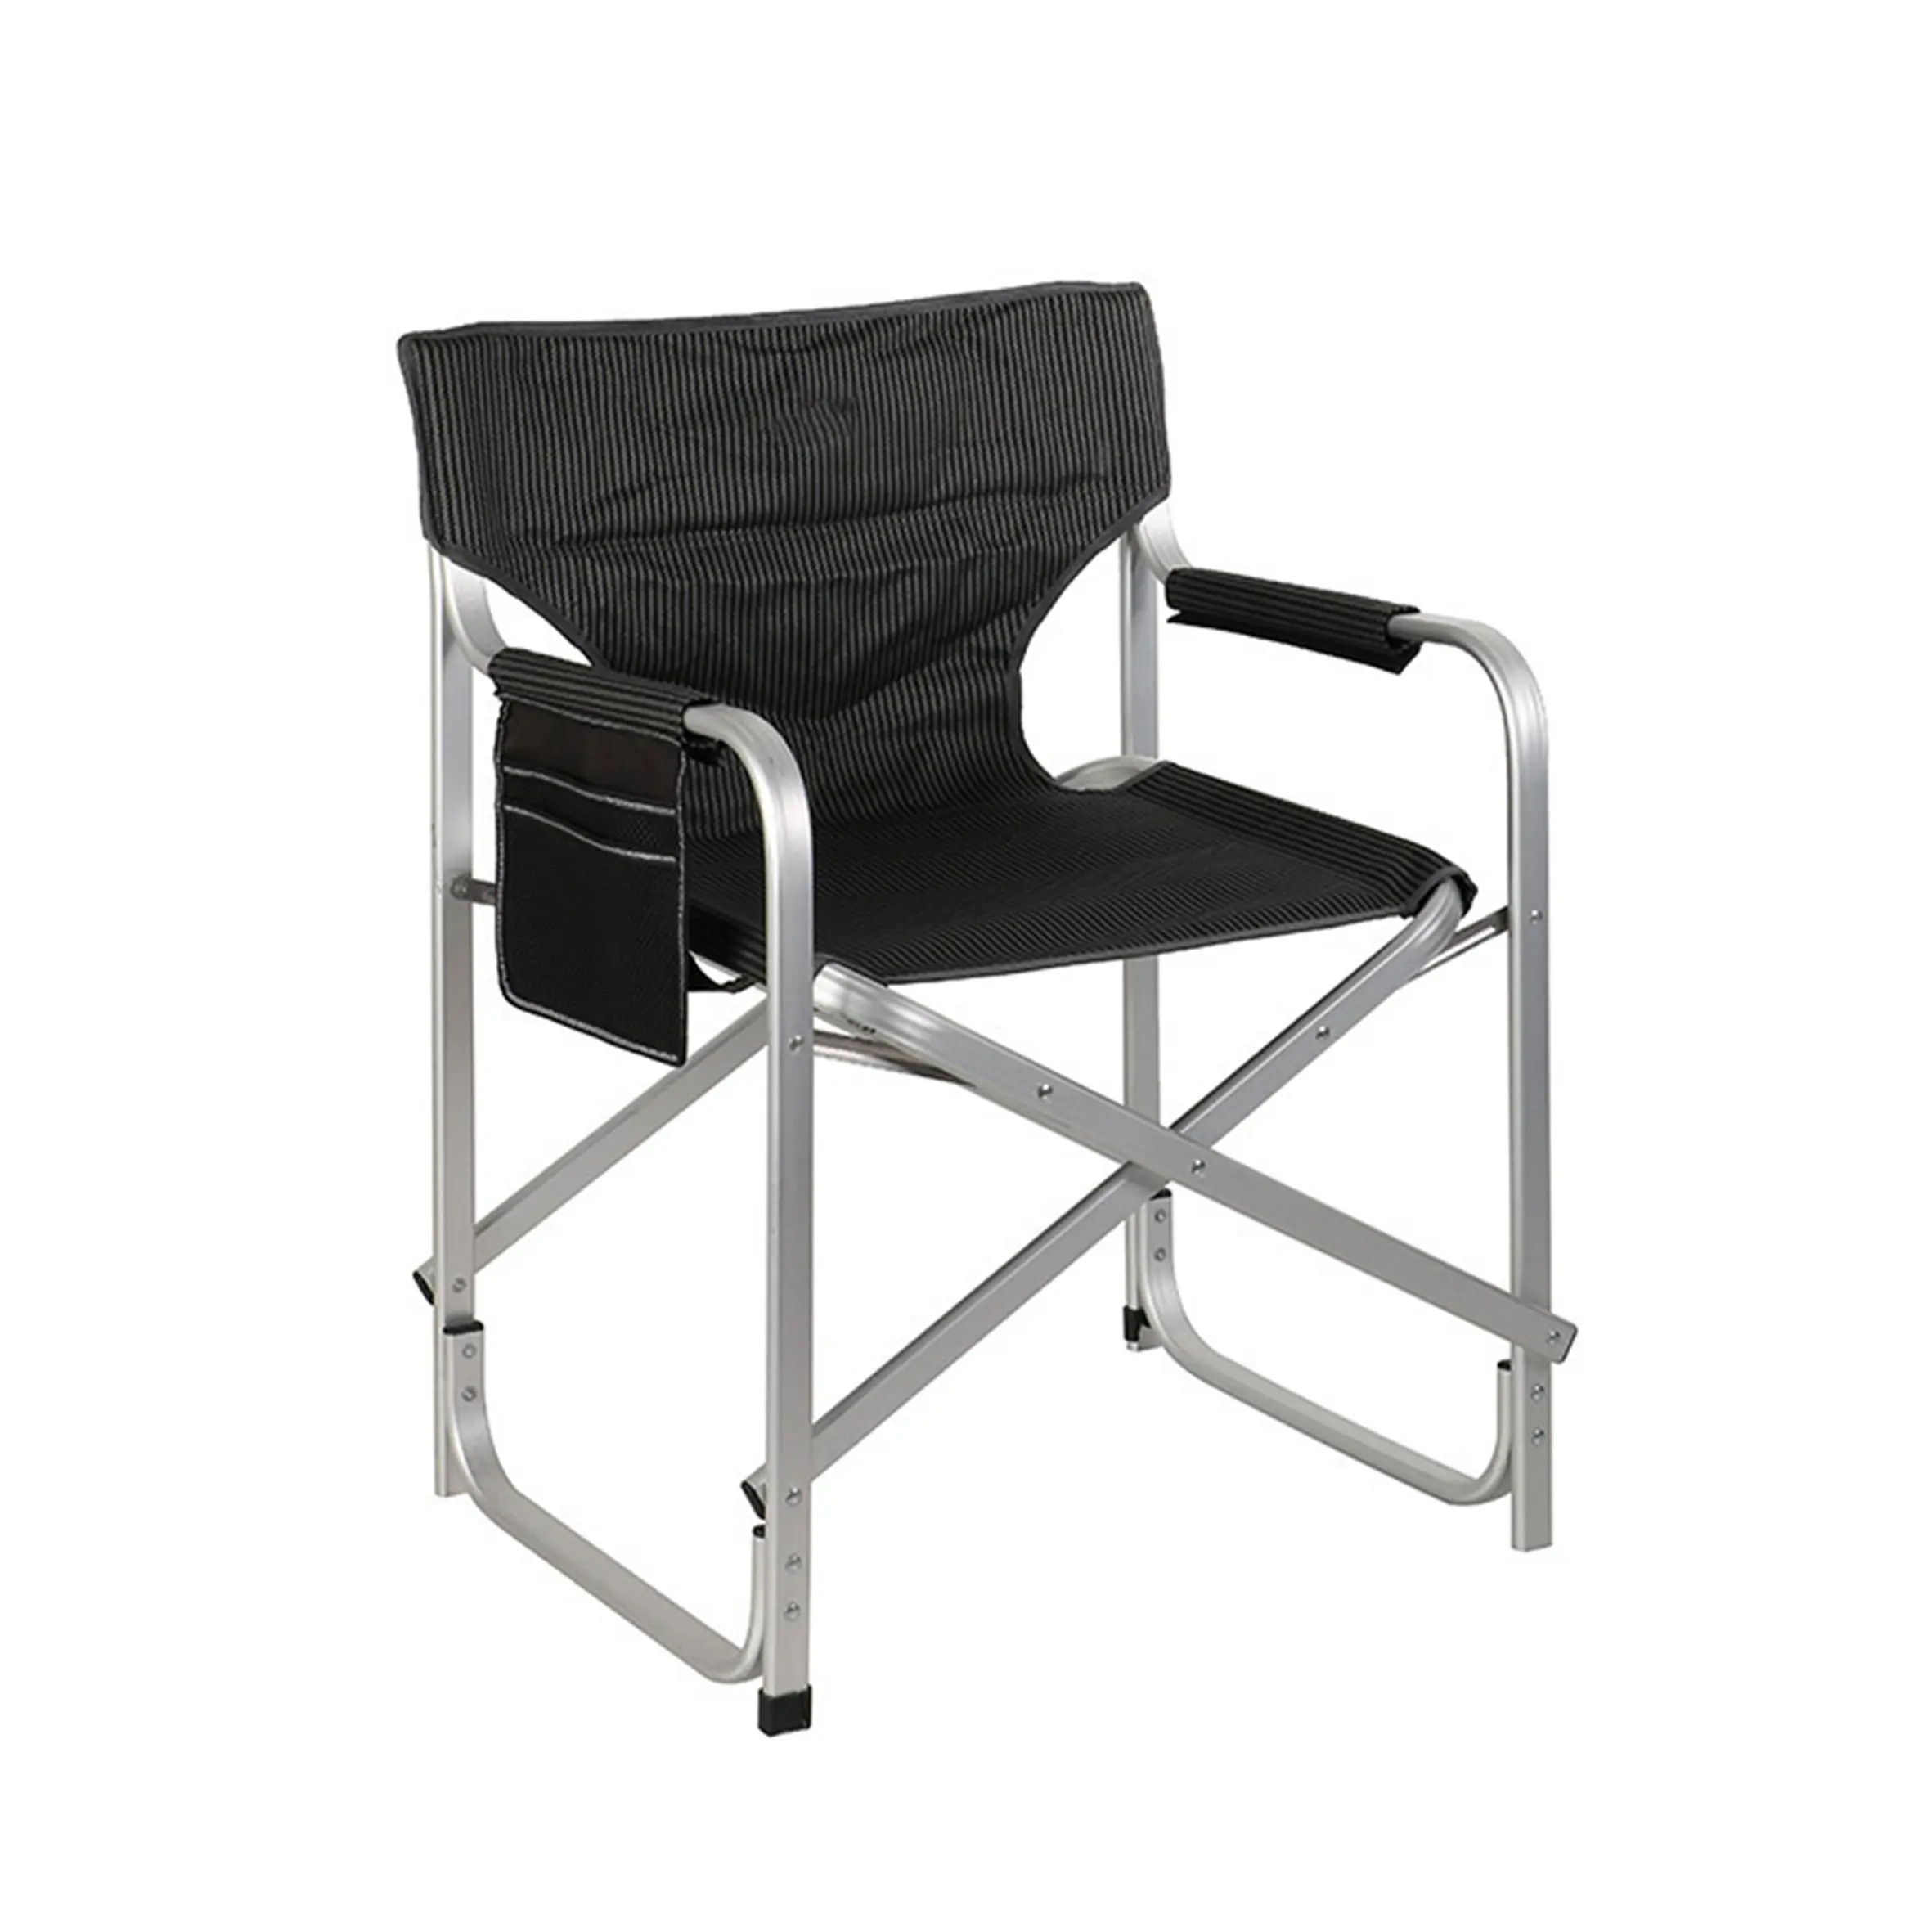 Fabrika fiyat alüminyum kamp sandalyeleri yüksek, kaliteli ahşap tahıl 2 koltuk rahat kamp sandalyeleri/